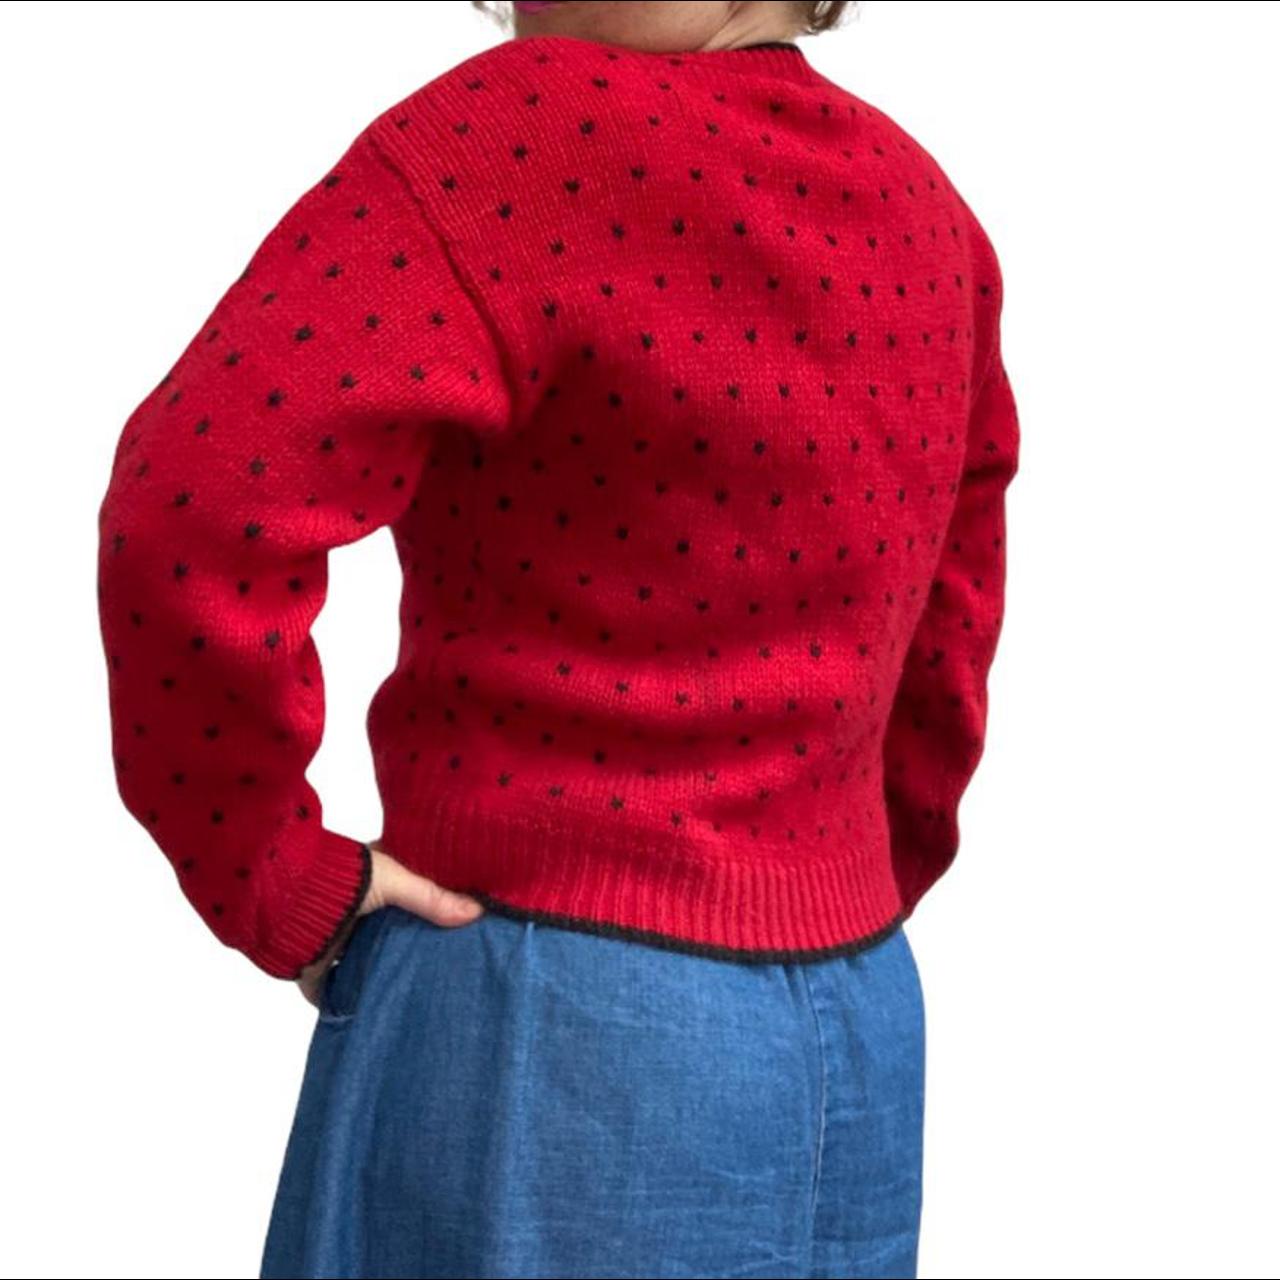 Product Image 2 - The best sheep vintage jumper